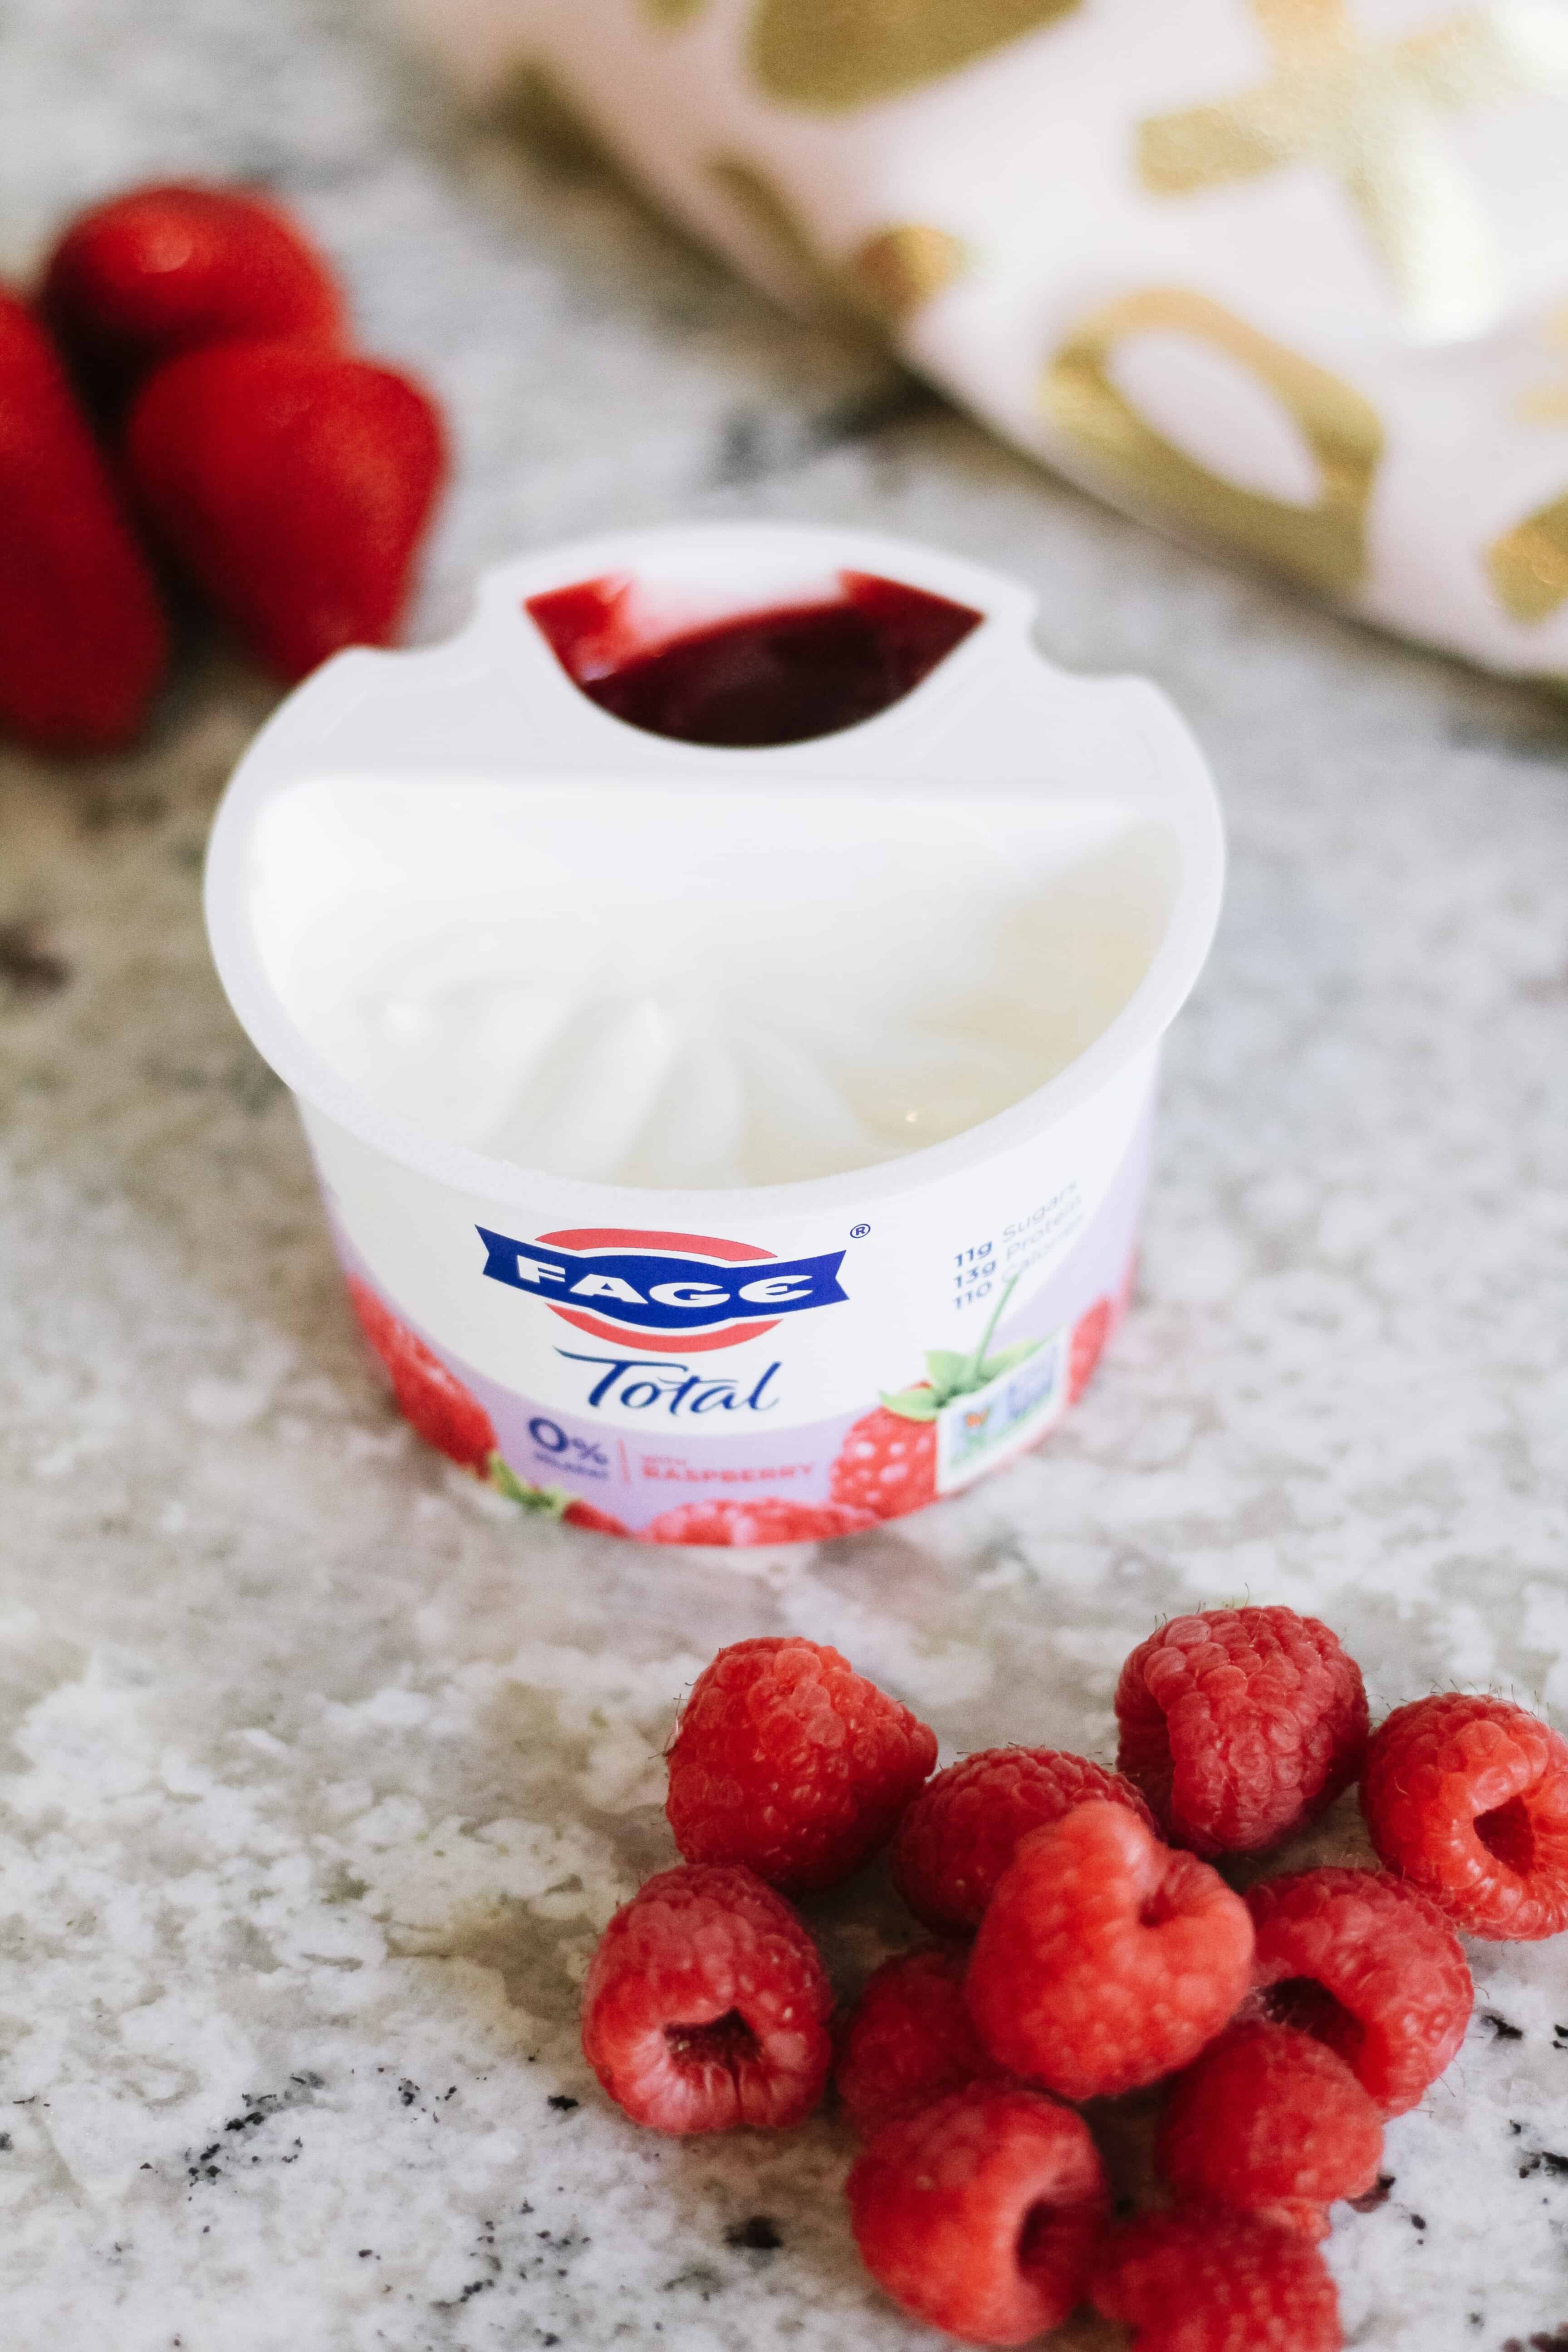 FAGE Total Split Cup yogurt